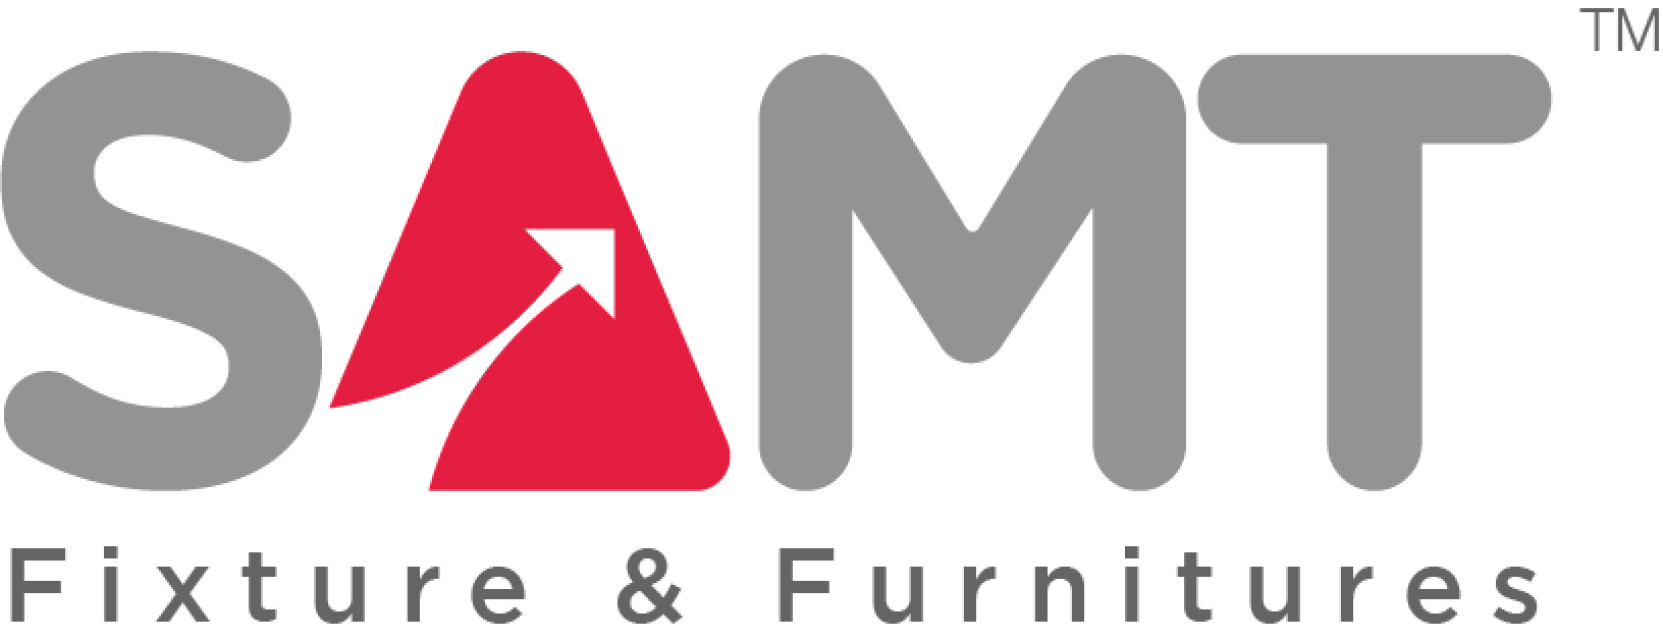 SAMT Fixture and Furniture Pvt Ltd